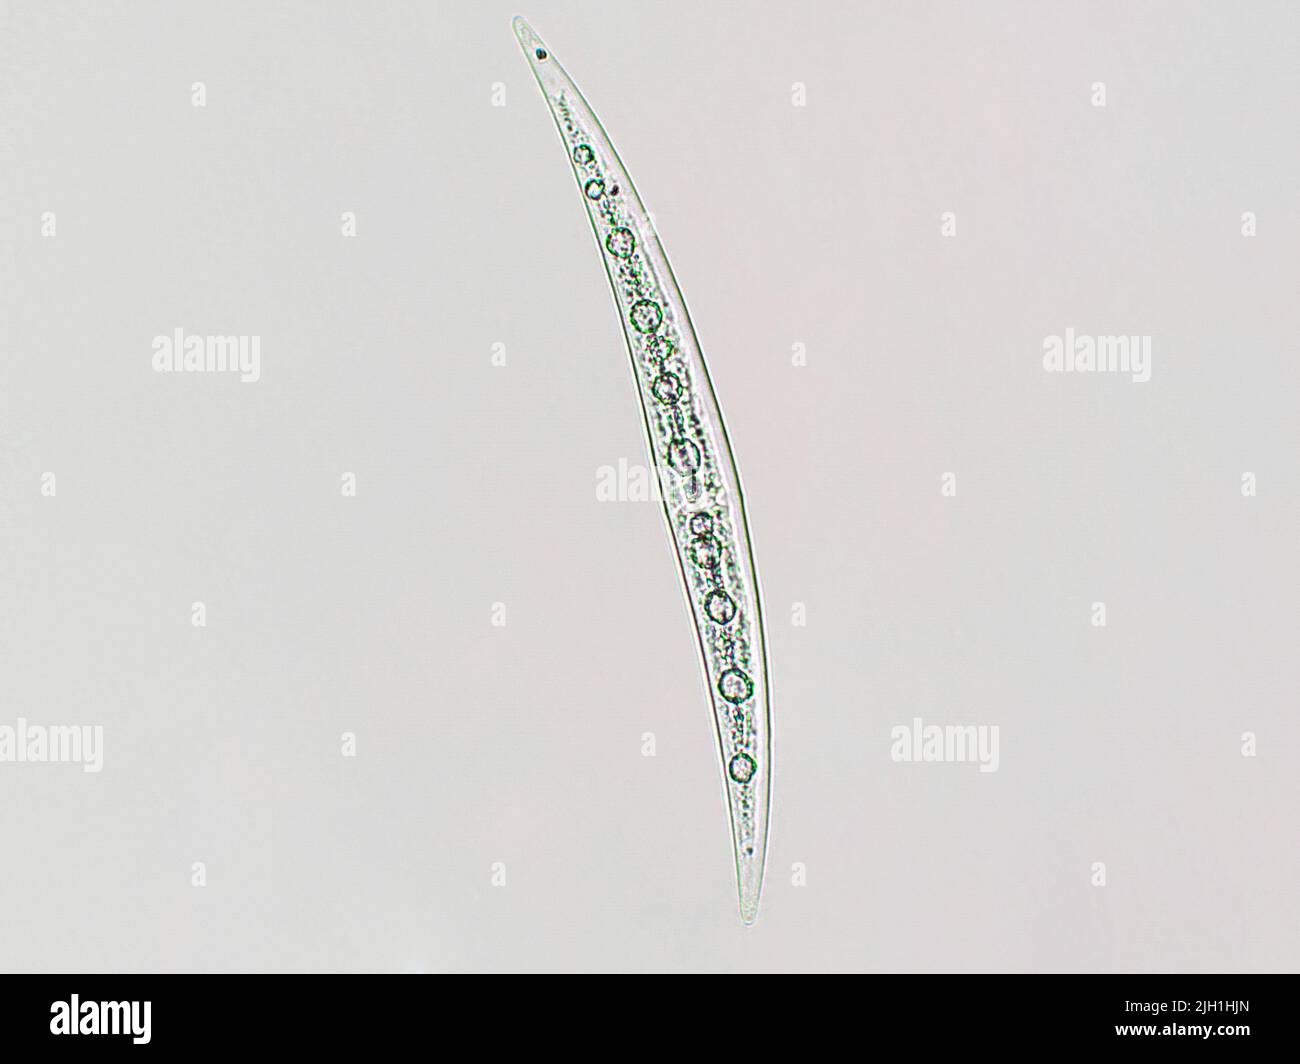 Closterium sp. Charophyta algae under microscopic view x40, Green algae Stock Photo